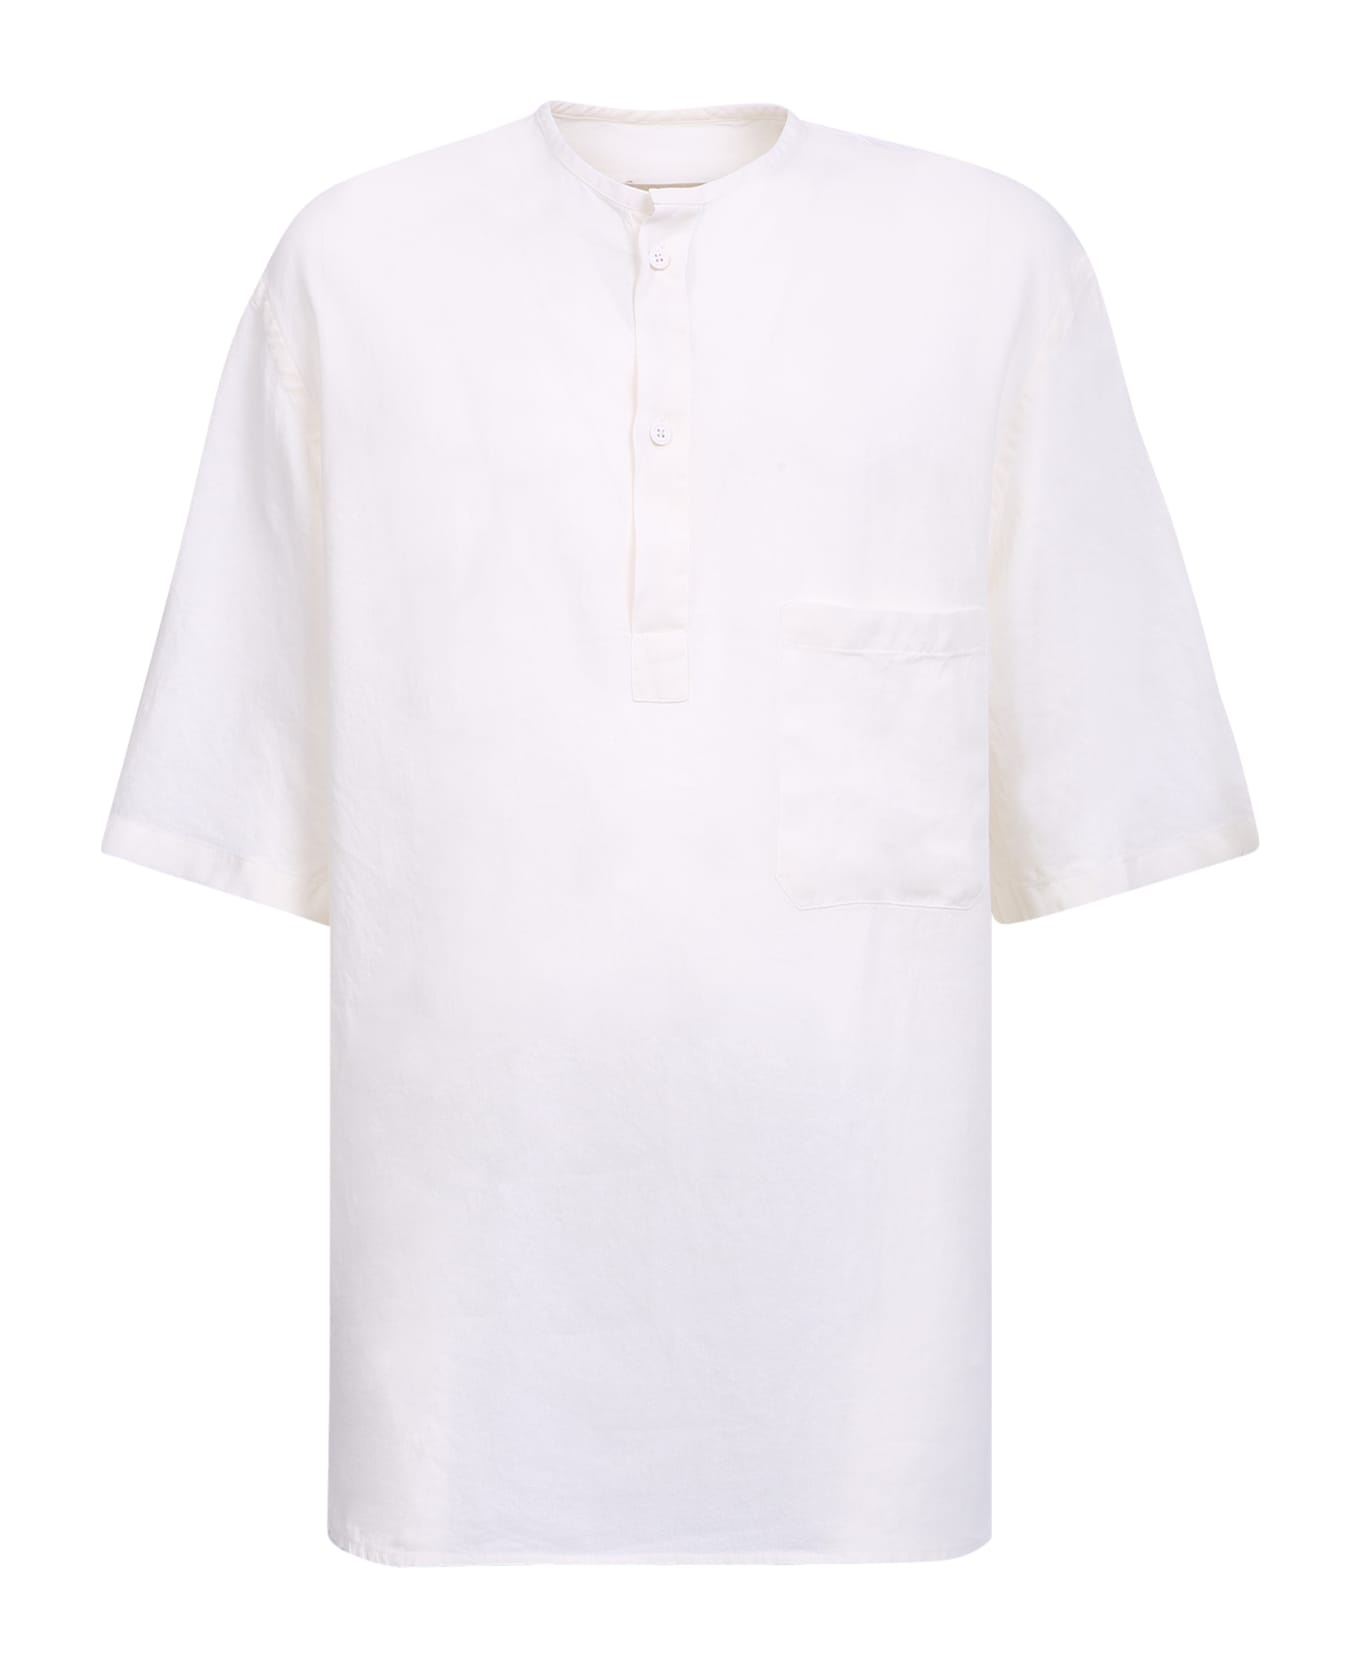 Giuseppe di Morabito Round Neck T-shirt - White シャツ